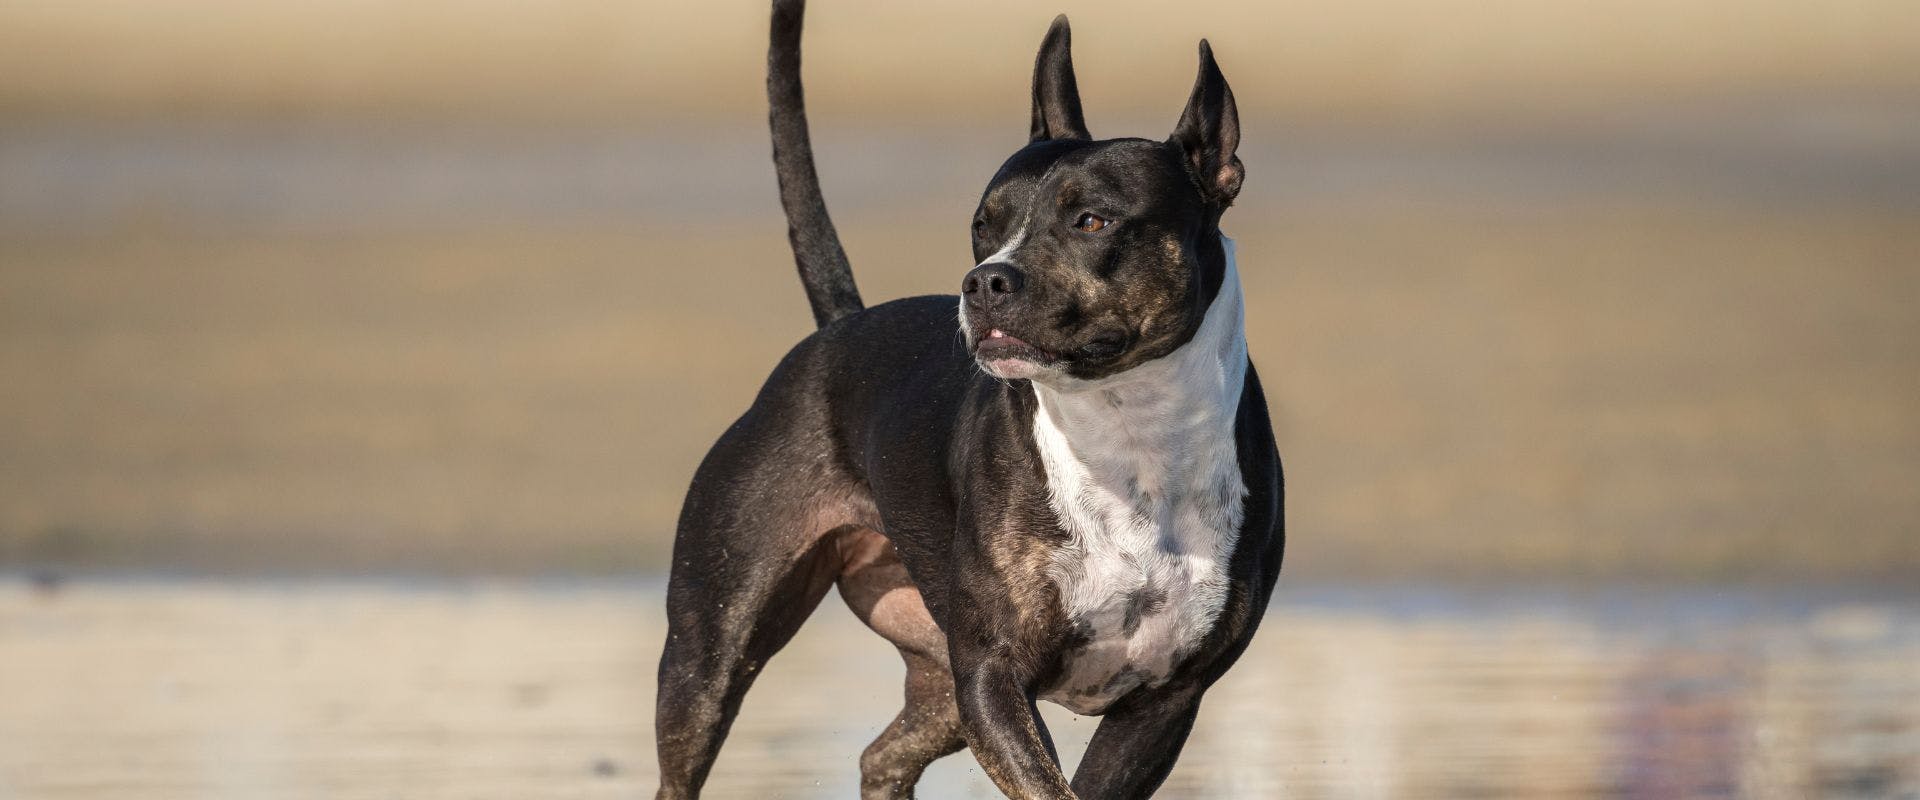 Staffordshire Bull Terrier running on beach